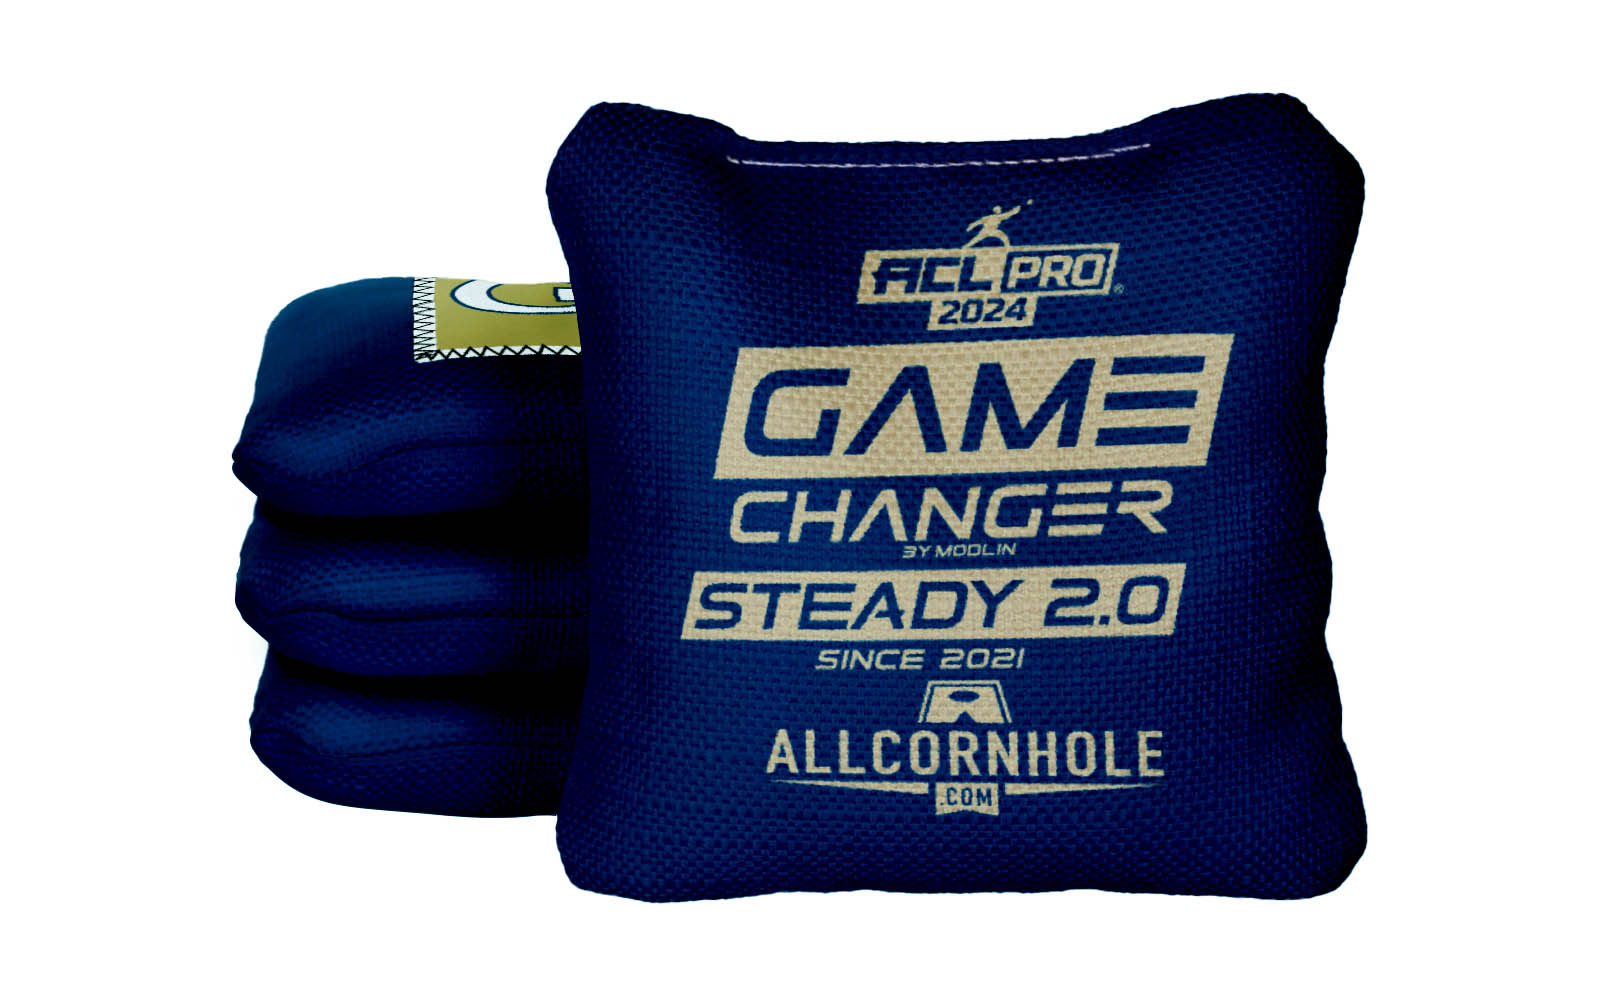 Officially Licensed Collegiate Cornhole Bags - Gamechanger Steady 2.0 - Set of 4 - Georgia Tech University